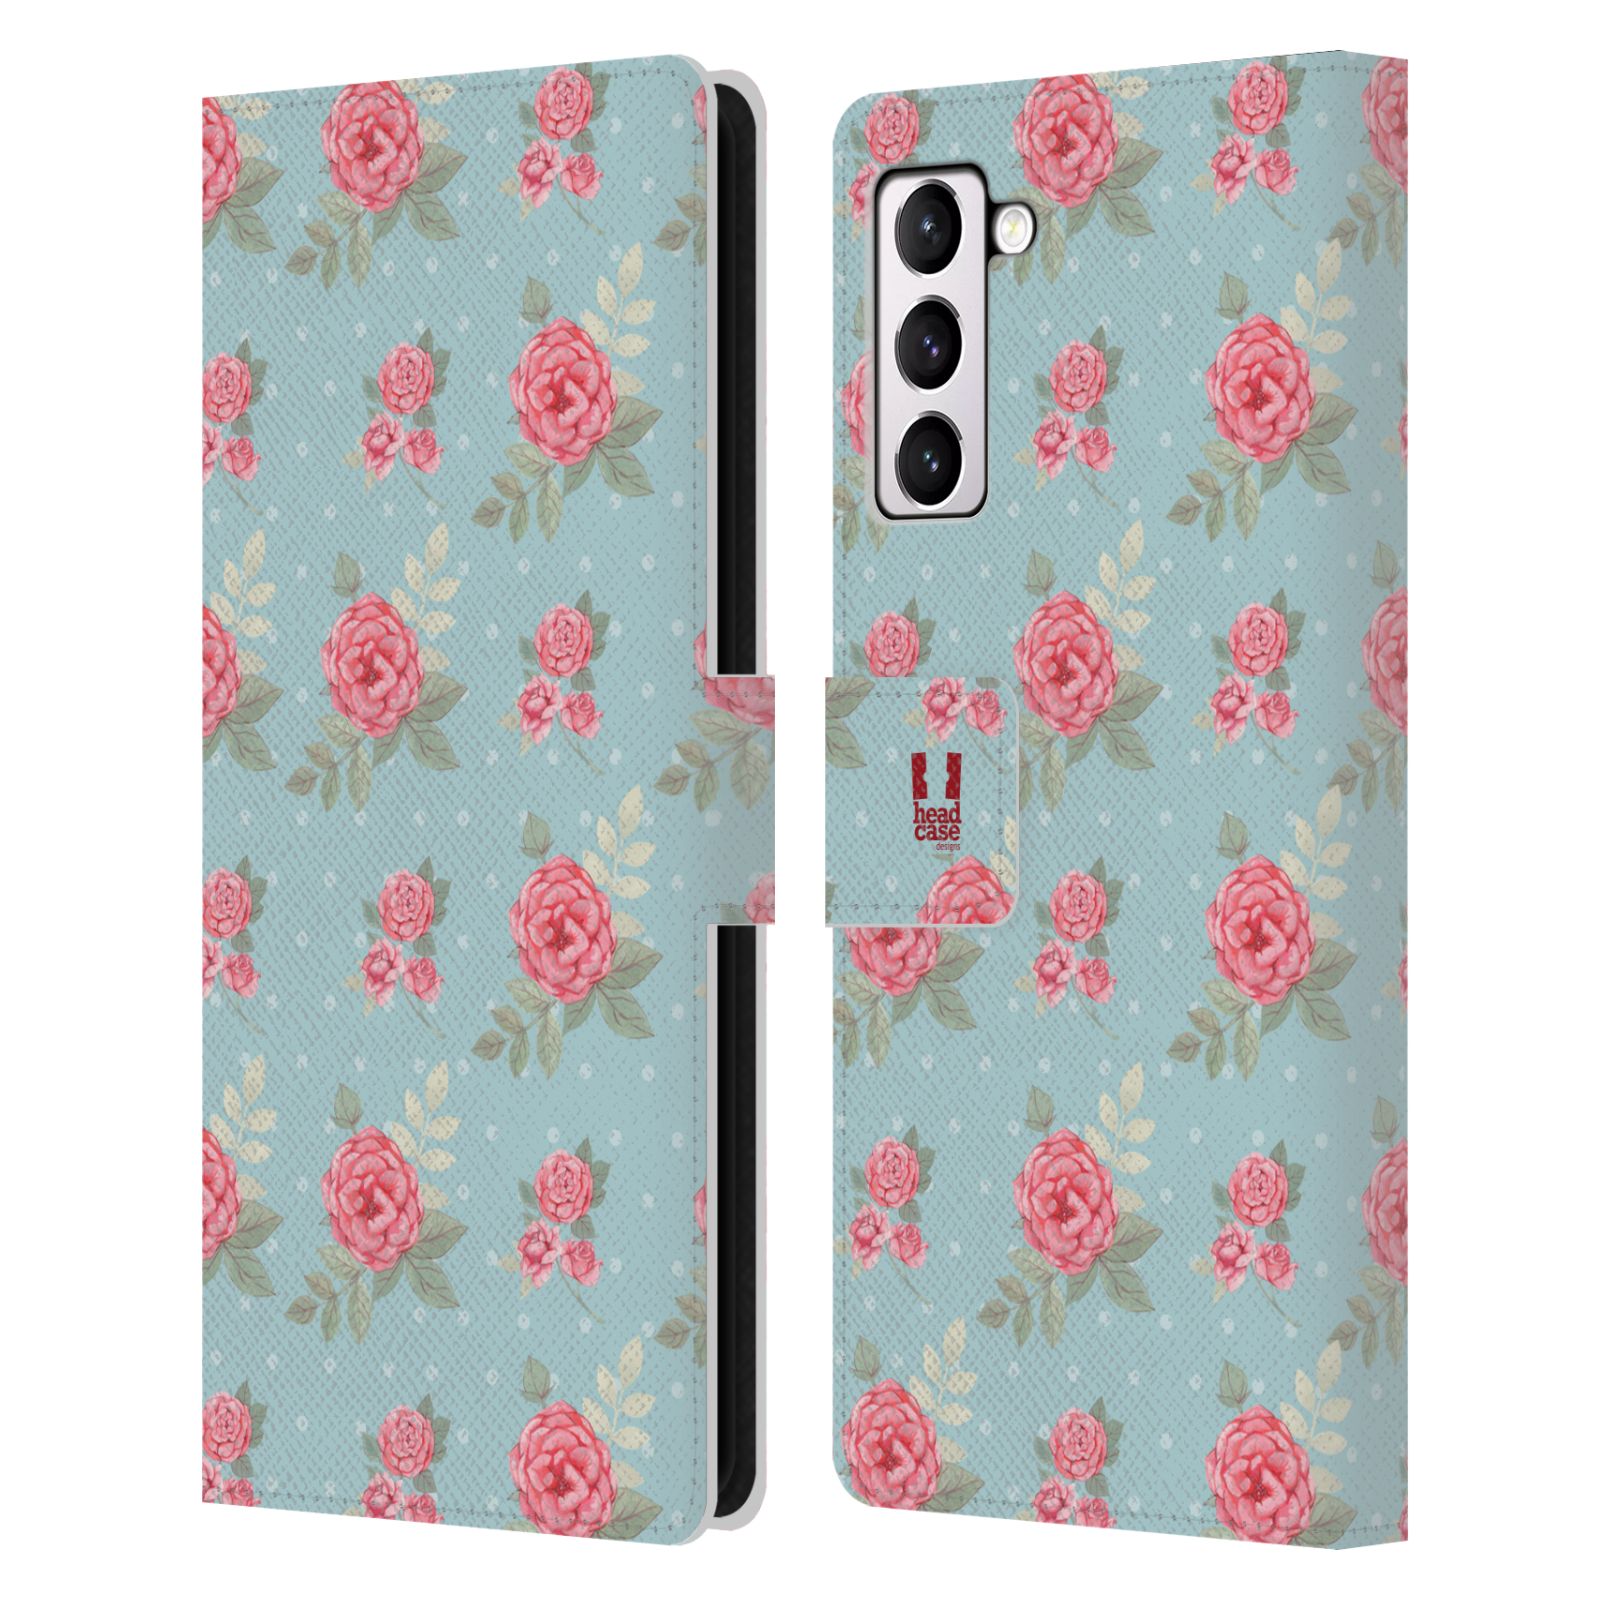 Pouzdro HEAD CASE na mobil Samsung Galaxy S21+ 5G / S21 PLUS 5G romantické květy anglické růže modrá a růžová